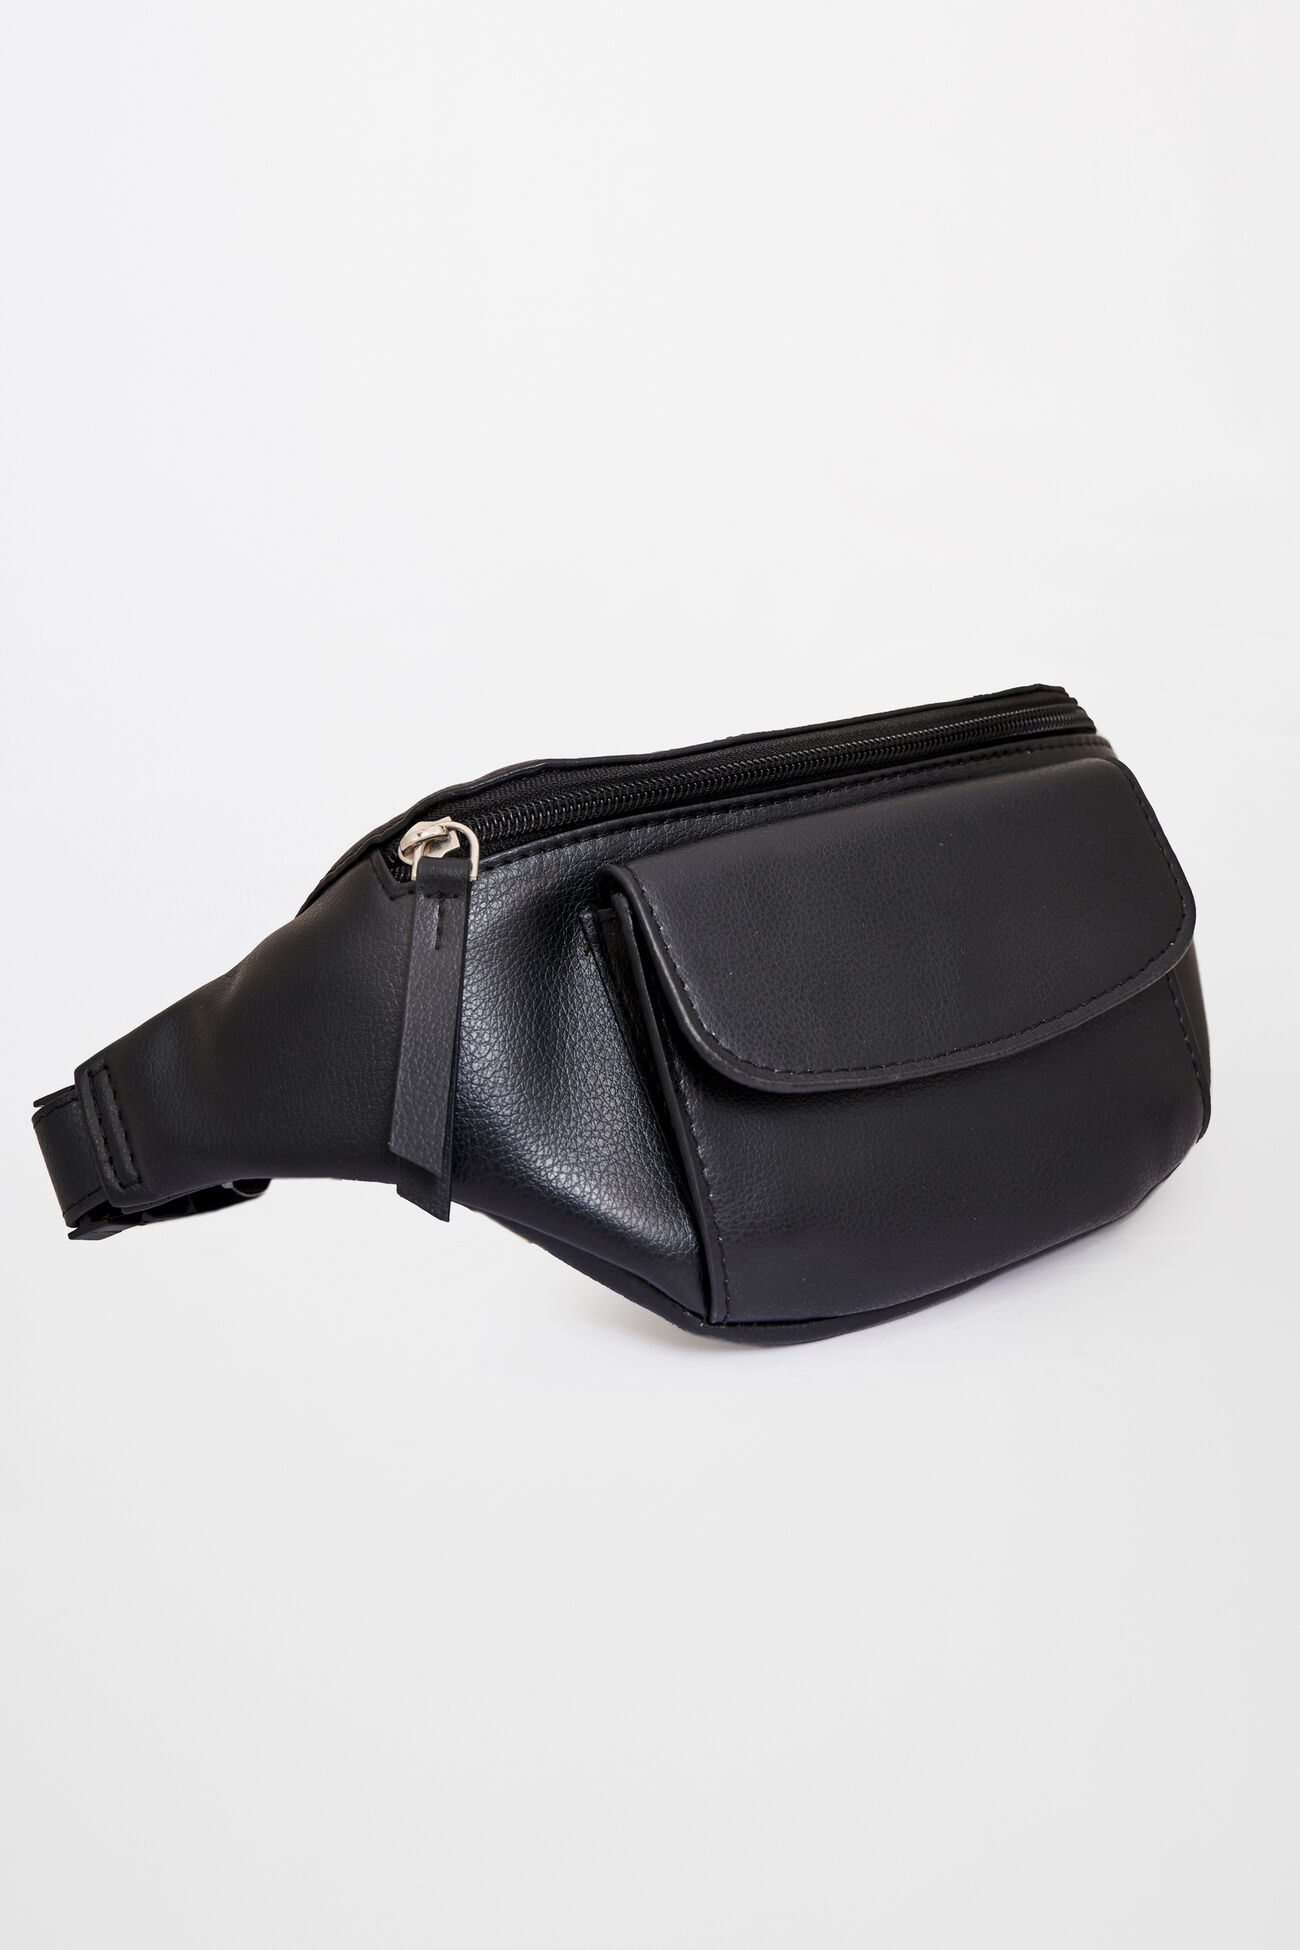 Black Zipper Bag, , image 1